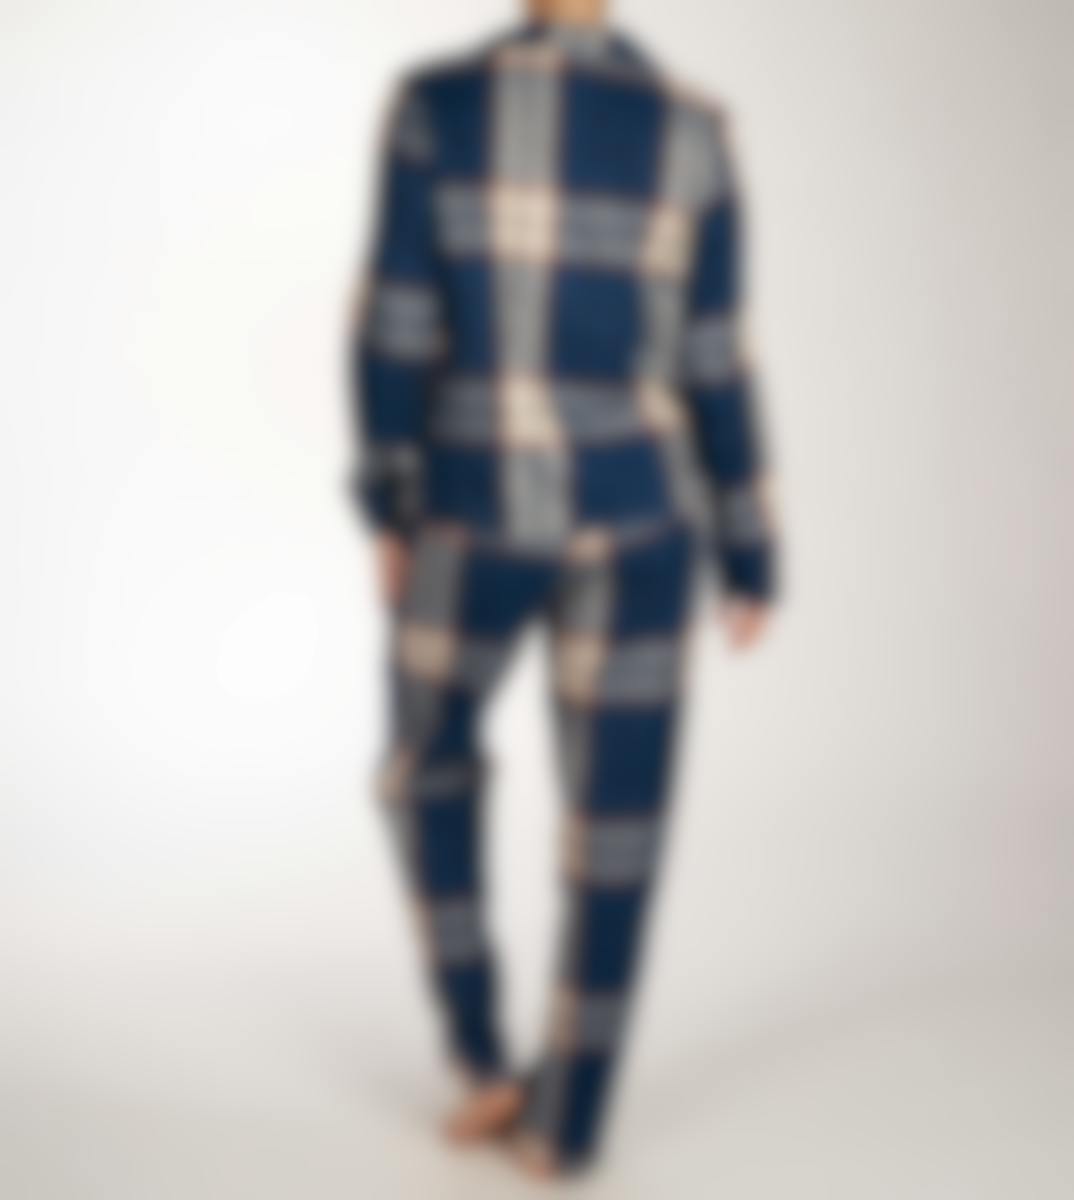 Tommy Hilfiger pyjama pantalon long Full Flannel Set Femmes